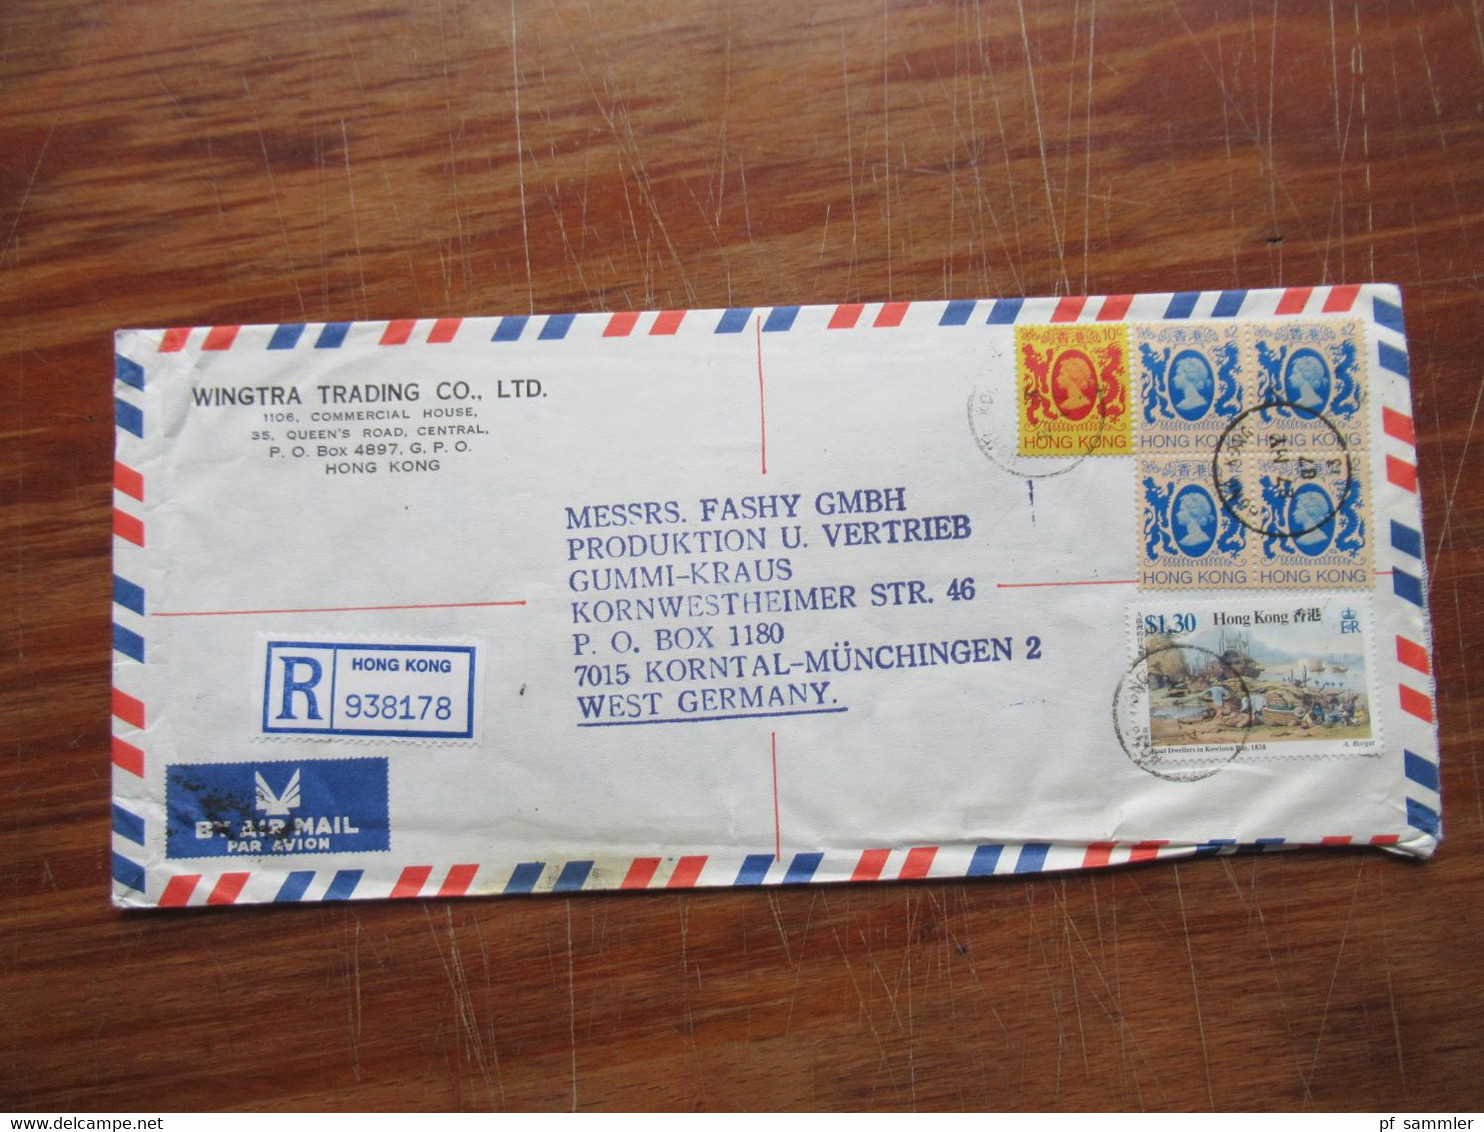 Asien 1986 GB Kolonie Hong Kong 1986 2x Firmen Belege Registered / Express Mit Hohen Frankaturen! - Storia Postale